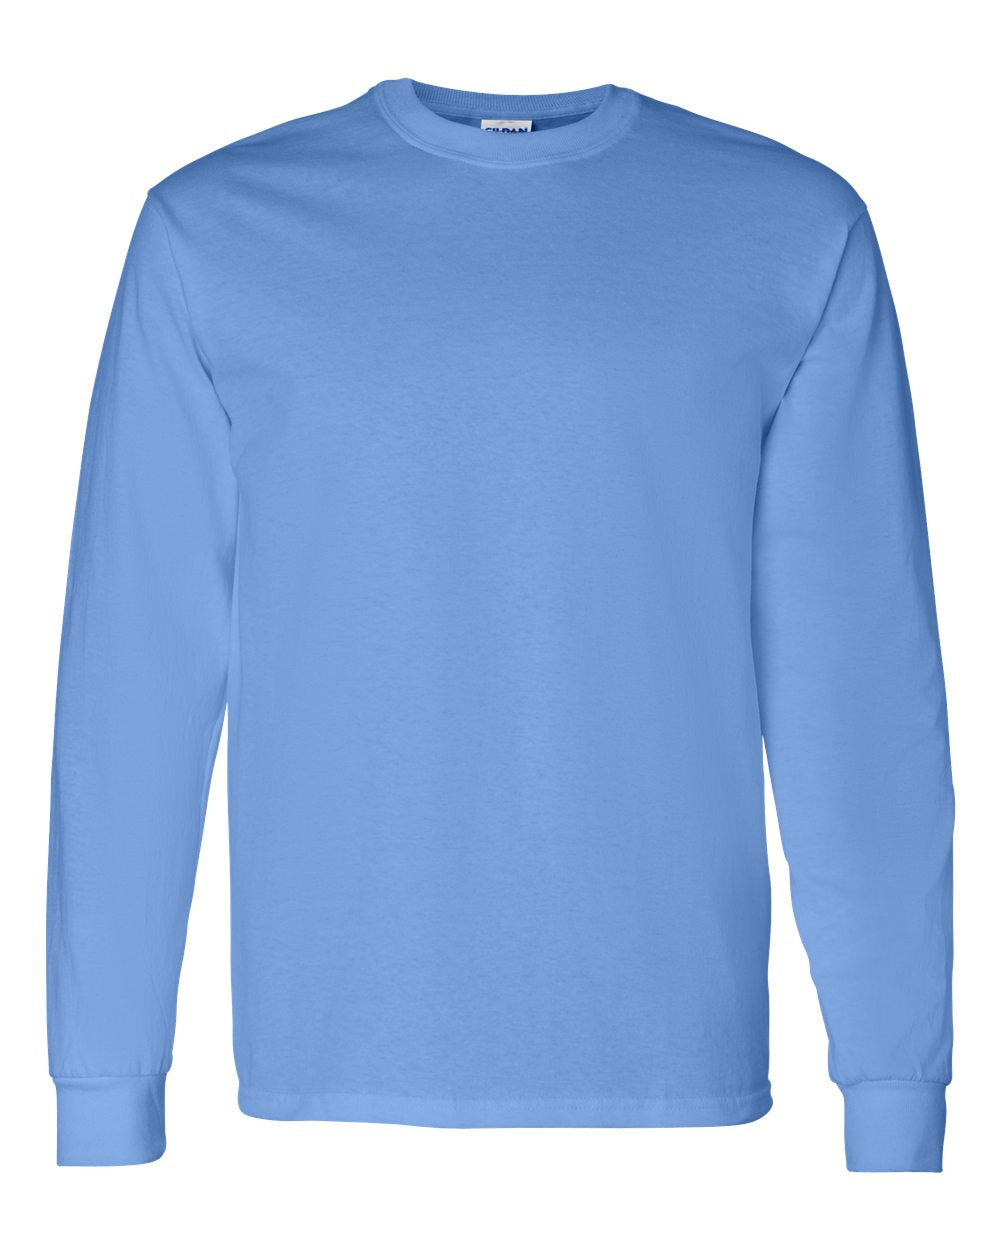 Pretreated Gildan 5400 Heavy Cotton Long Sleeve T-Shirt - Carolina Blue